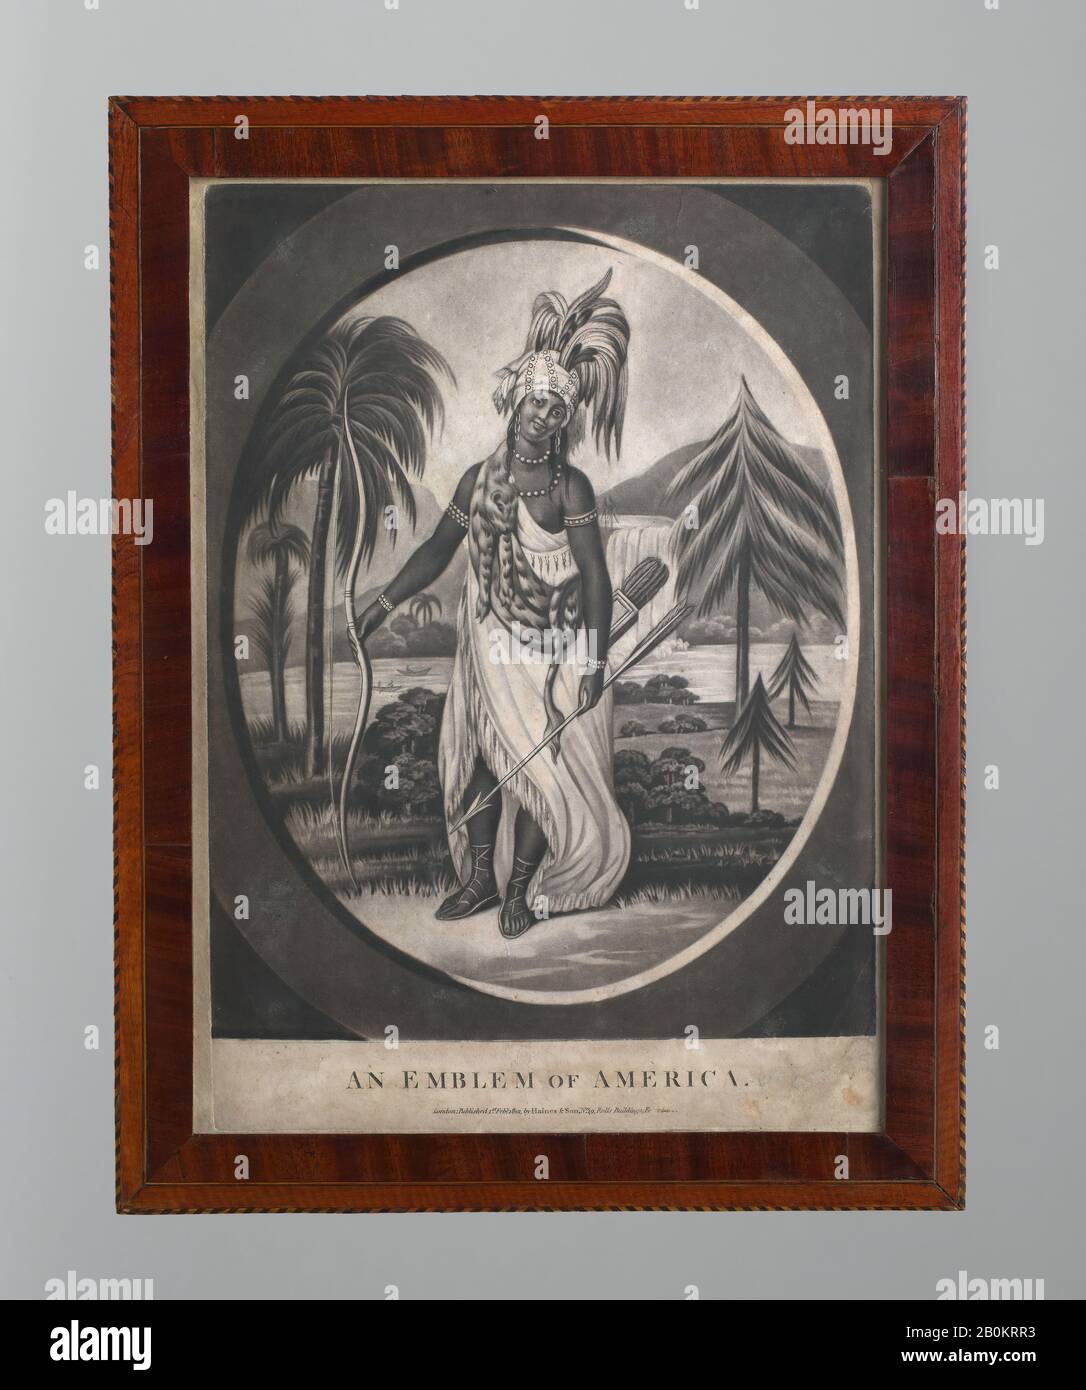 Haines & Son, An Emblem of America, American, 1801, Probably made in Boston, Massachusetts, United States, American, Mezzotint; frame: mahogany veneer, white pine, poplar, 16 3/8 x 12 1/2 in. (41.6 x 31.8 cm), Prints Stock Photo